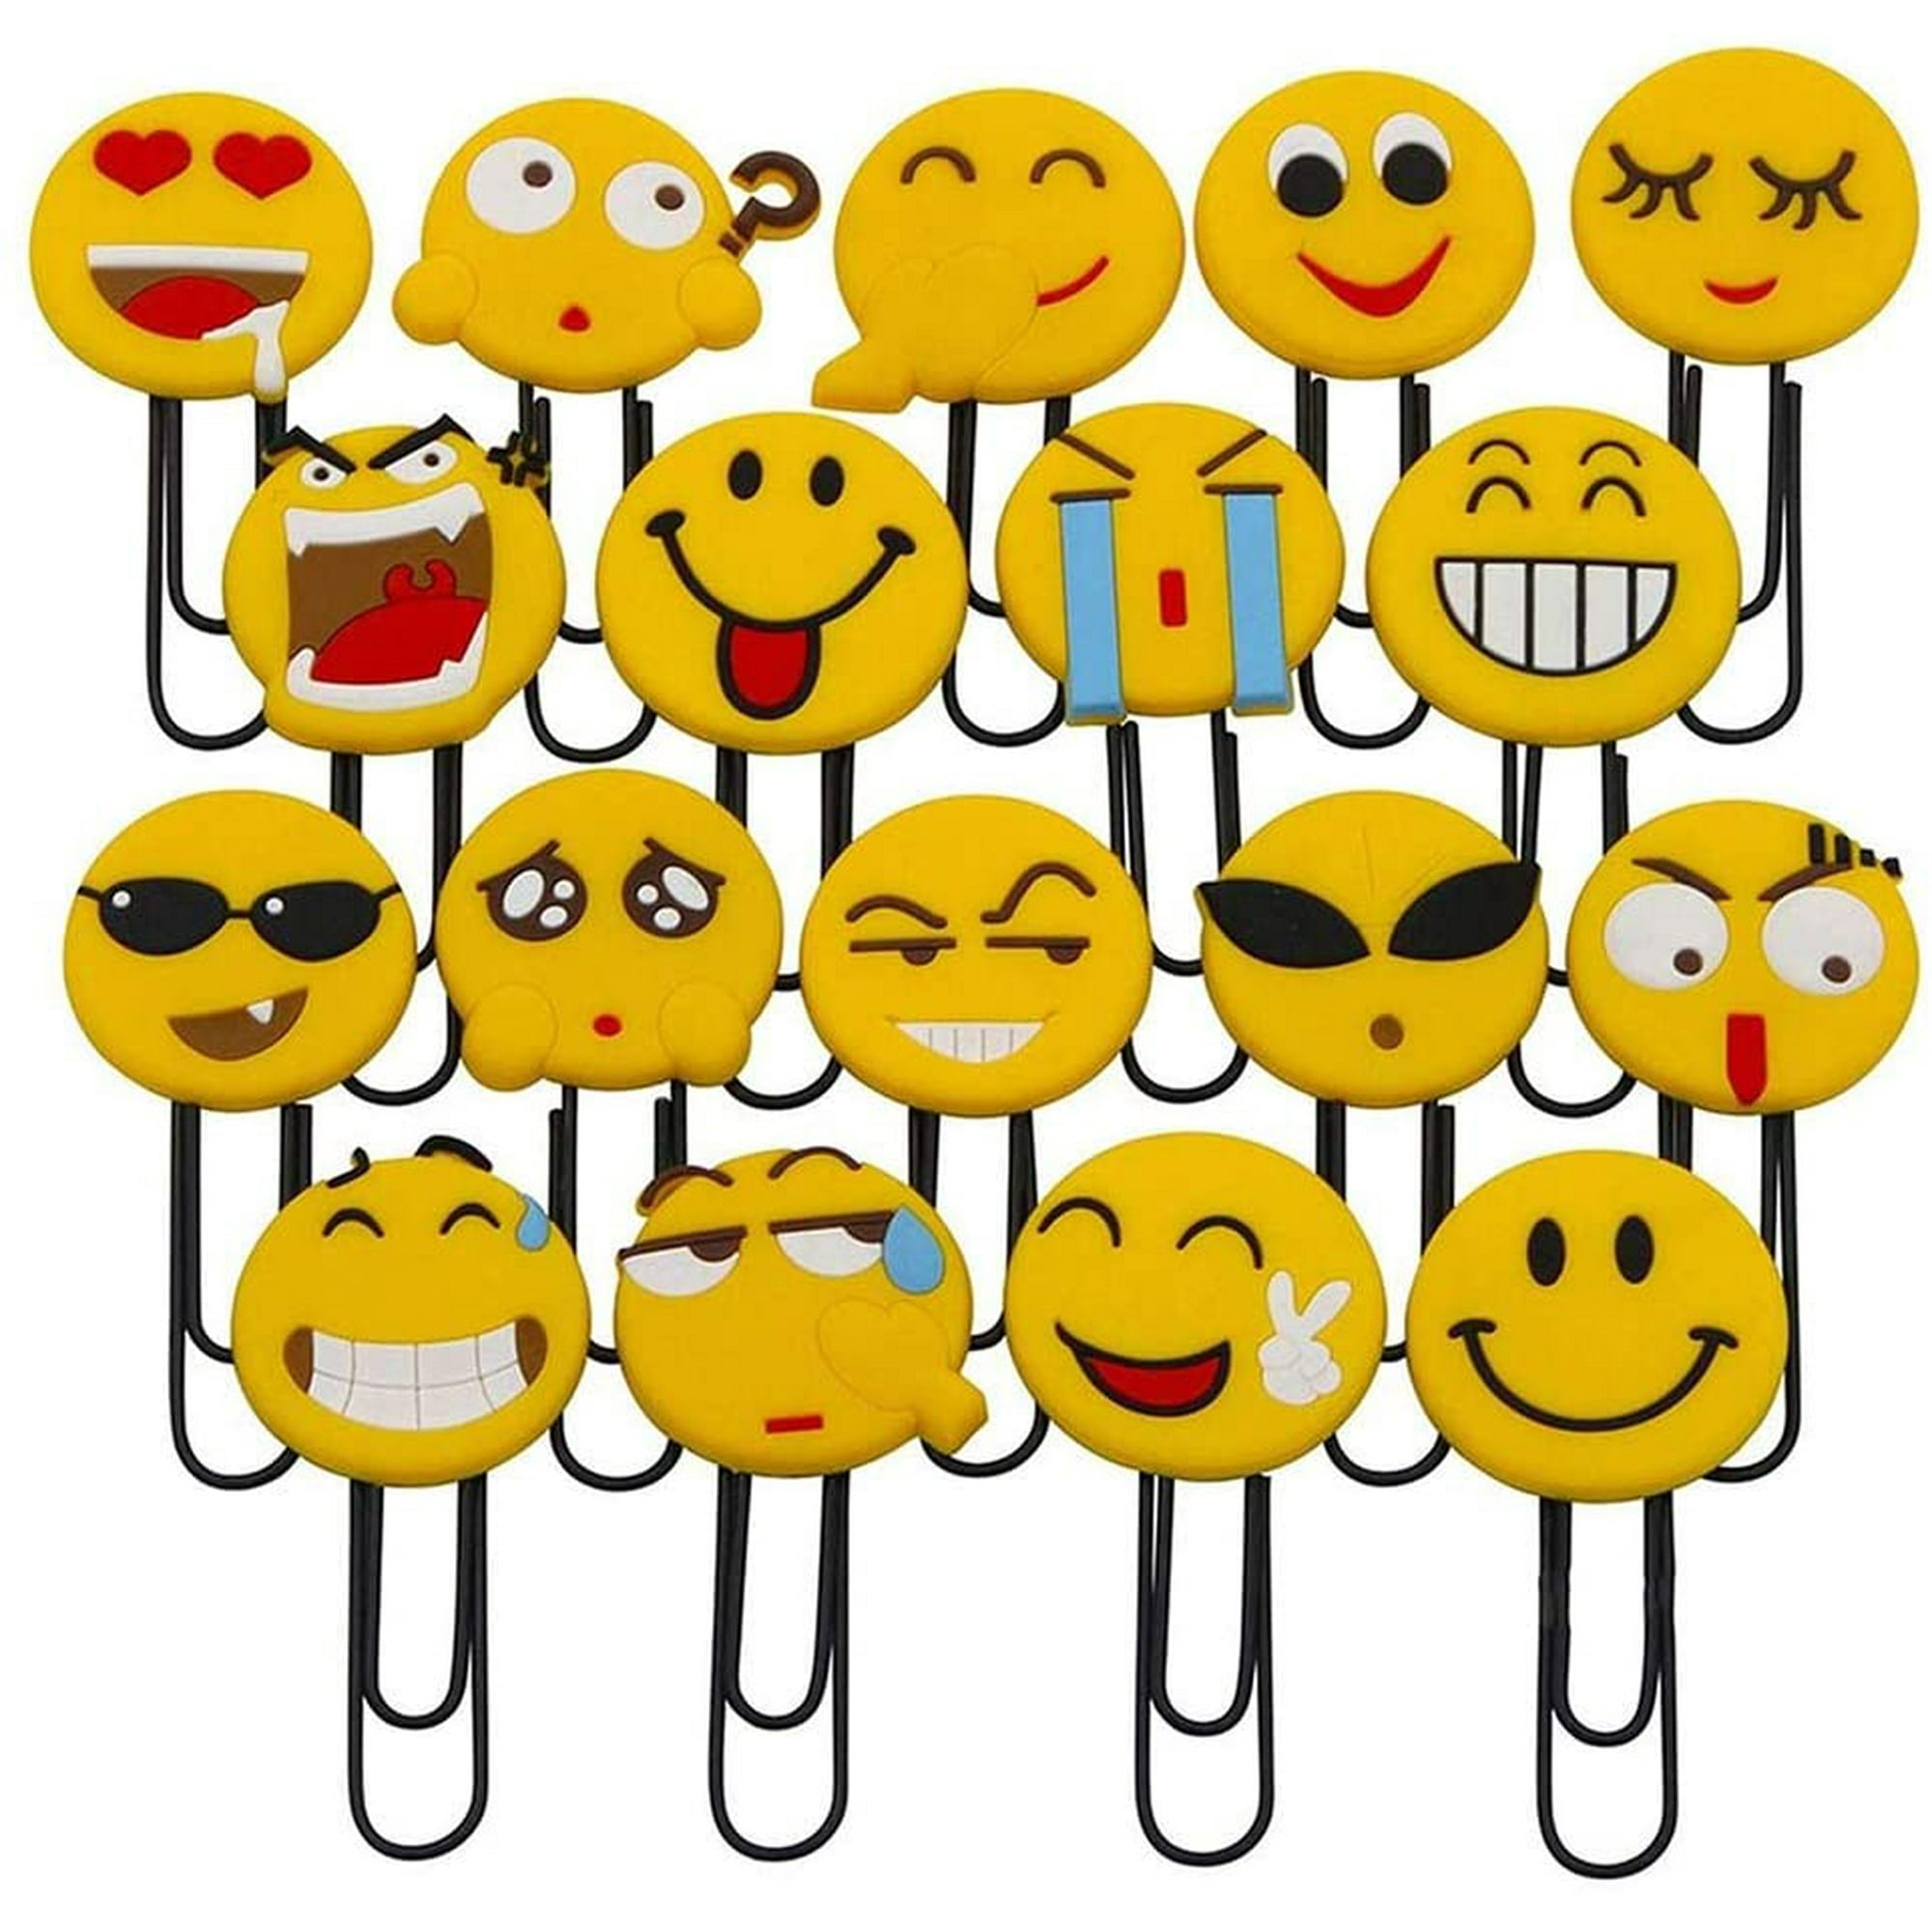 Cute Emoji Bookmarks, Funny Paper Bookmark, Novelty Emoticon Book ...